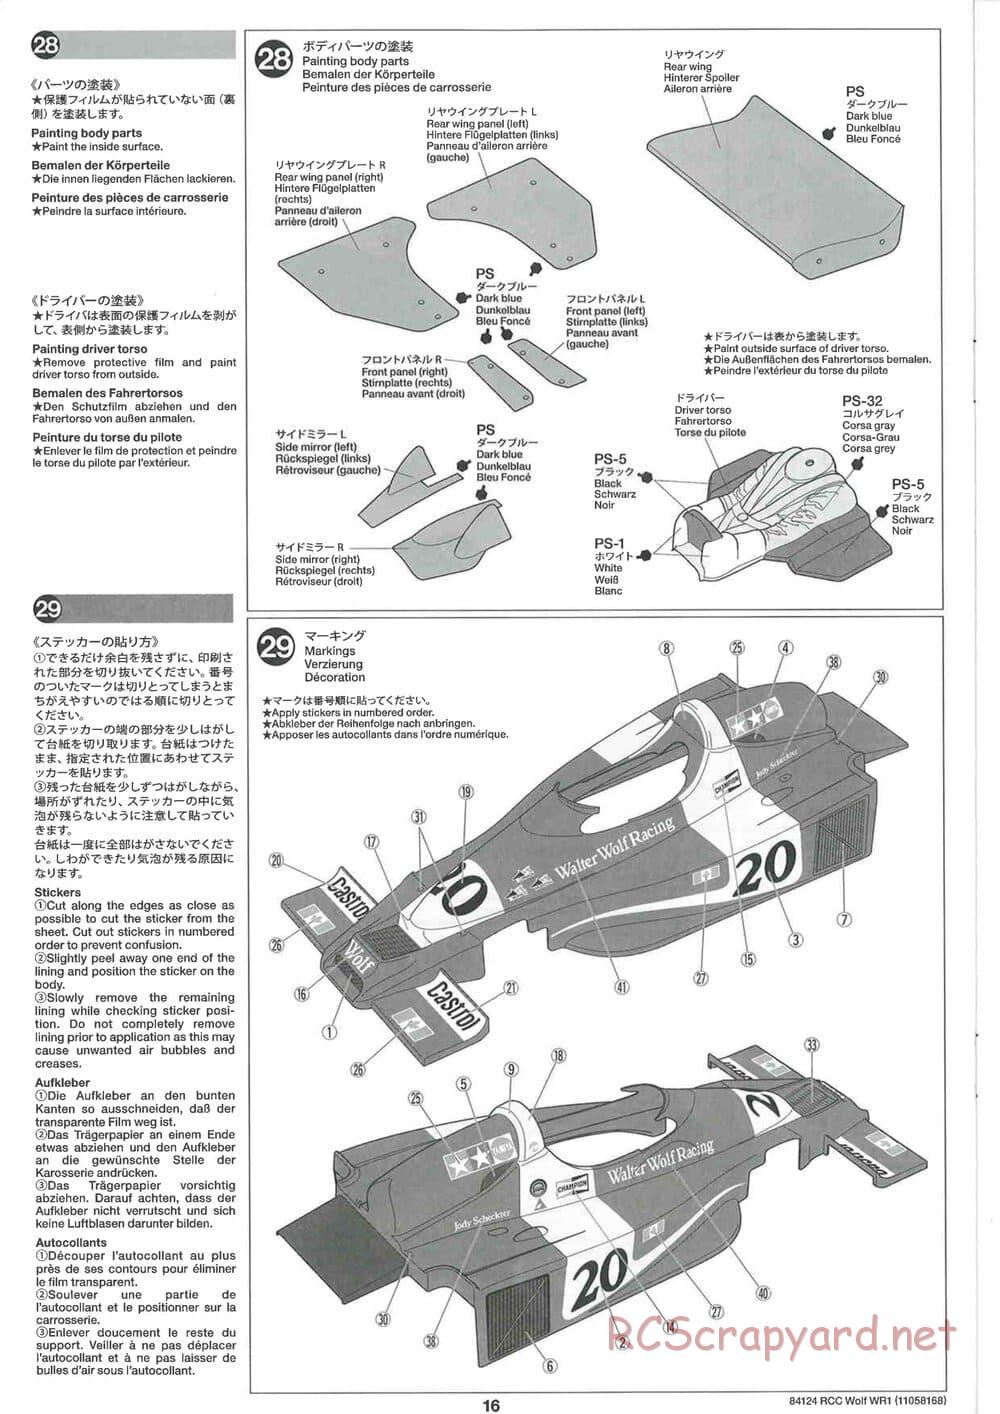 Tamiya - Wolf WR1 - F104W Chassis - Manual - Page 16